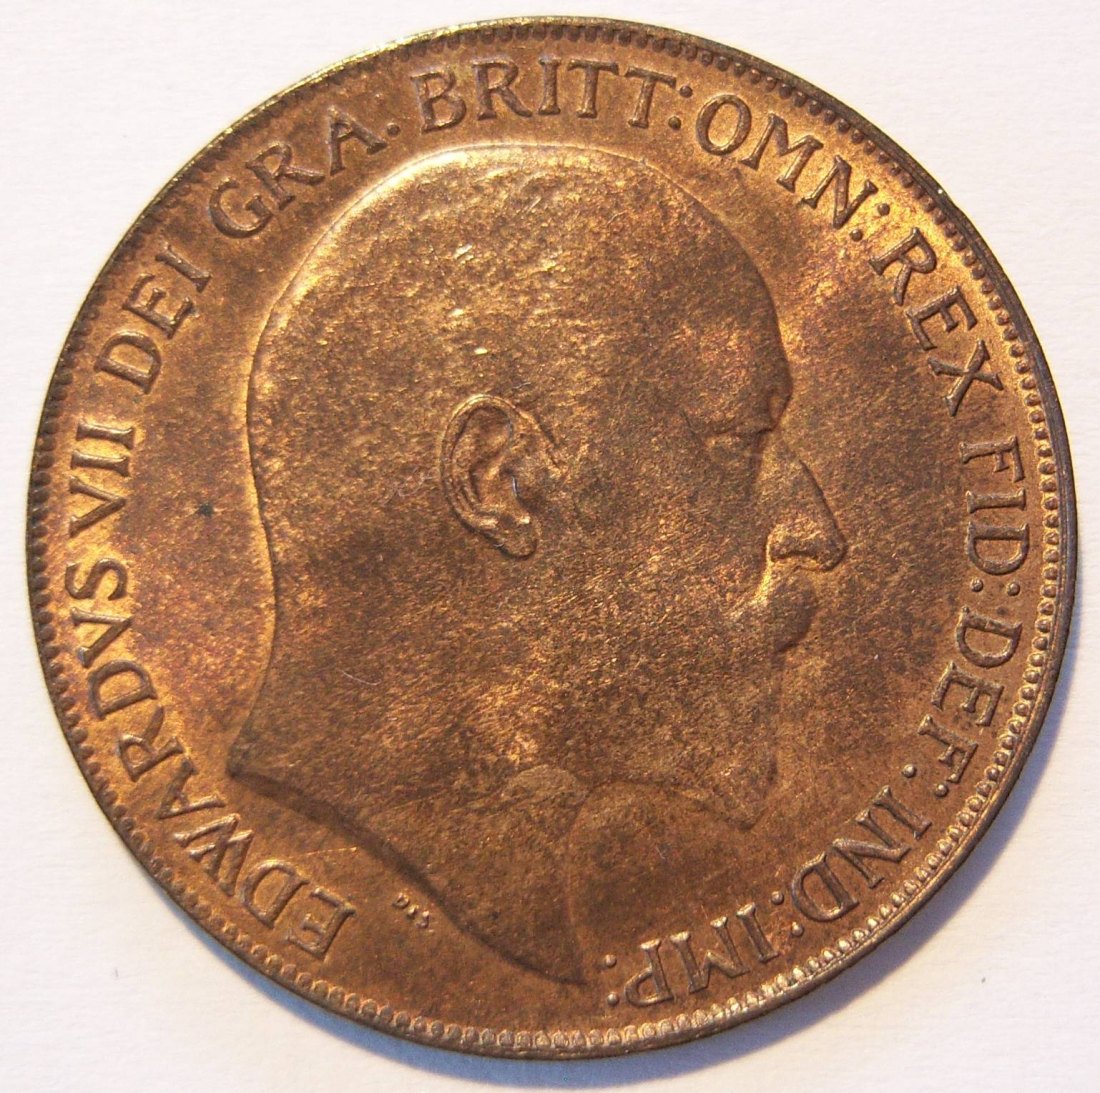  Grossbritannien 1 One Penny 1910 ERHALTUNG !!   